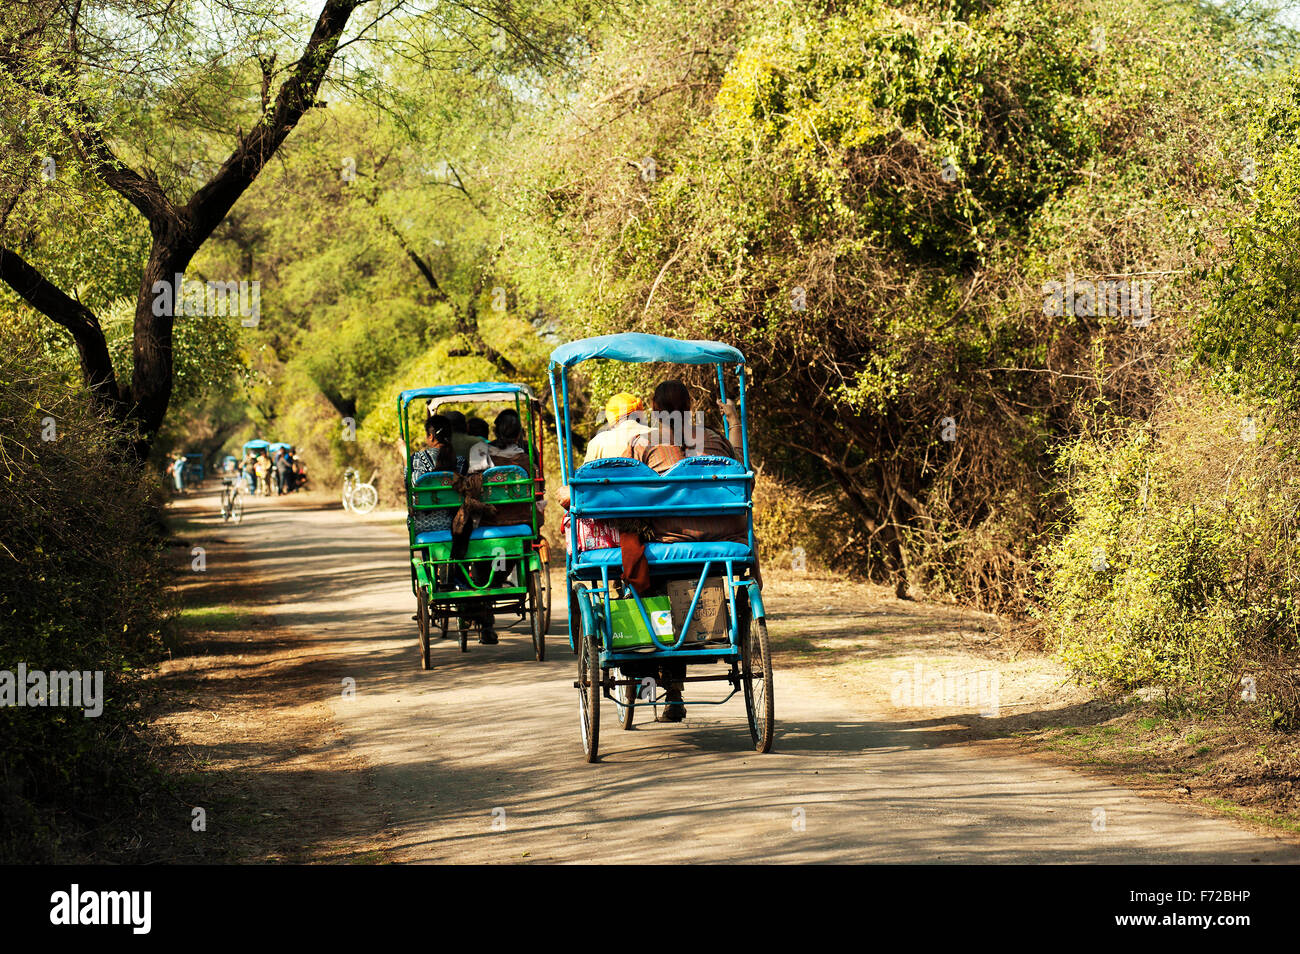 Cycle rickshaw on road, keoladeo national park, bharatpur, uttar pradesh, india, asia Stock Photo